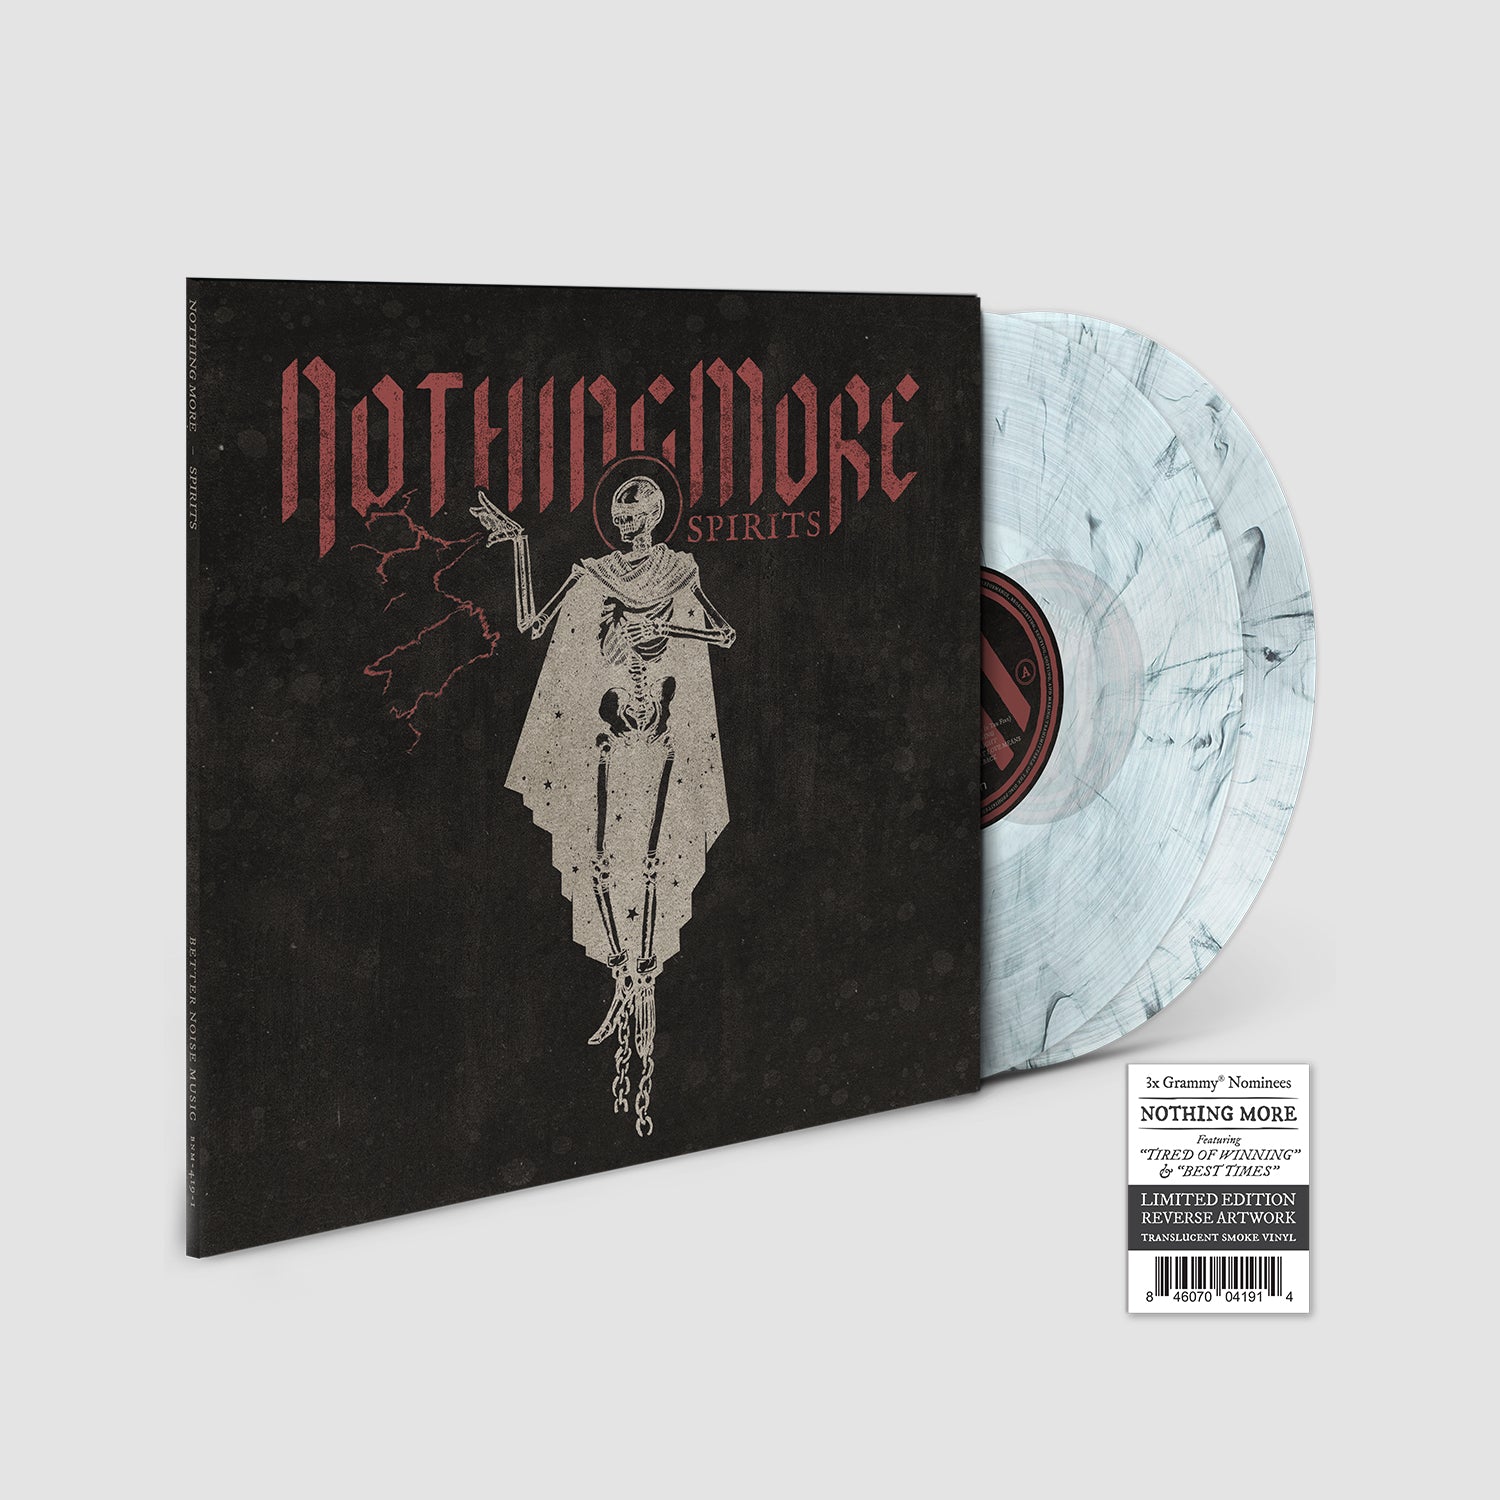 NOTHING MORE - SPIRITS NEW ALBUM CD - NOTHING MORE